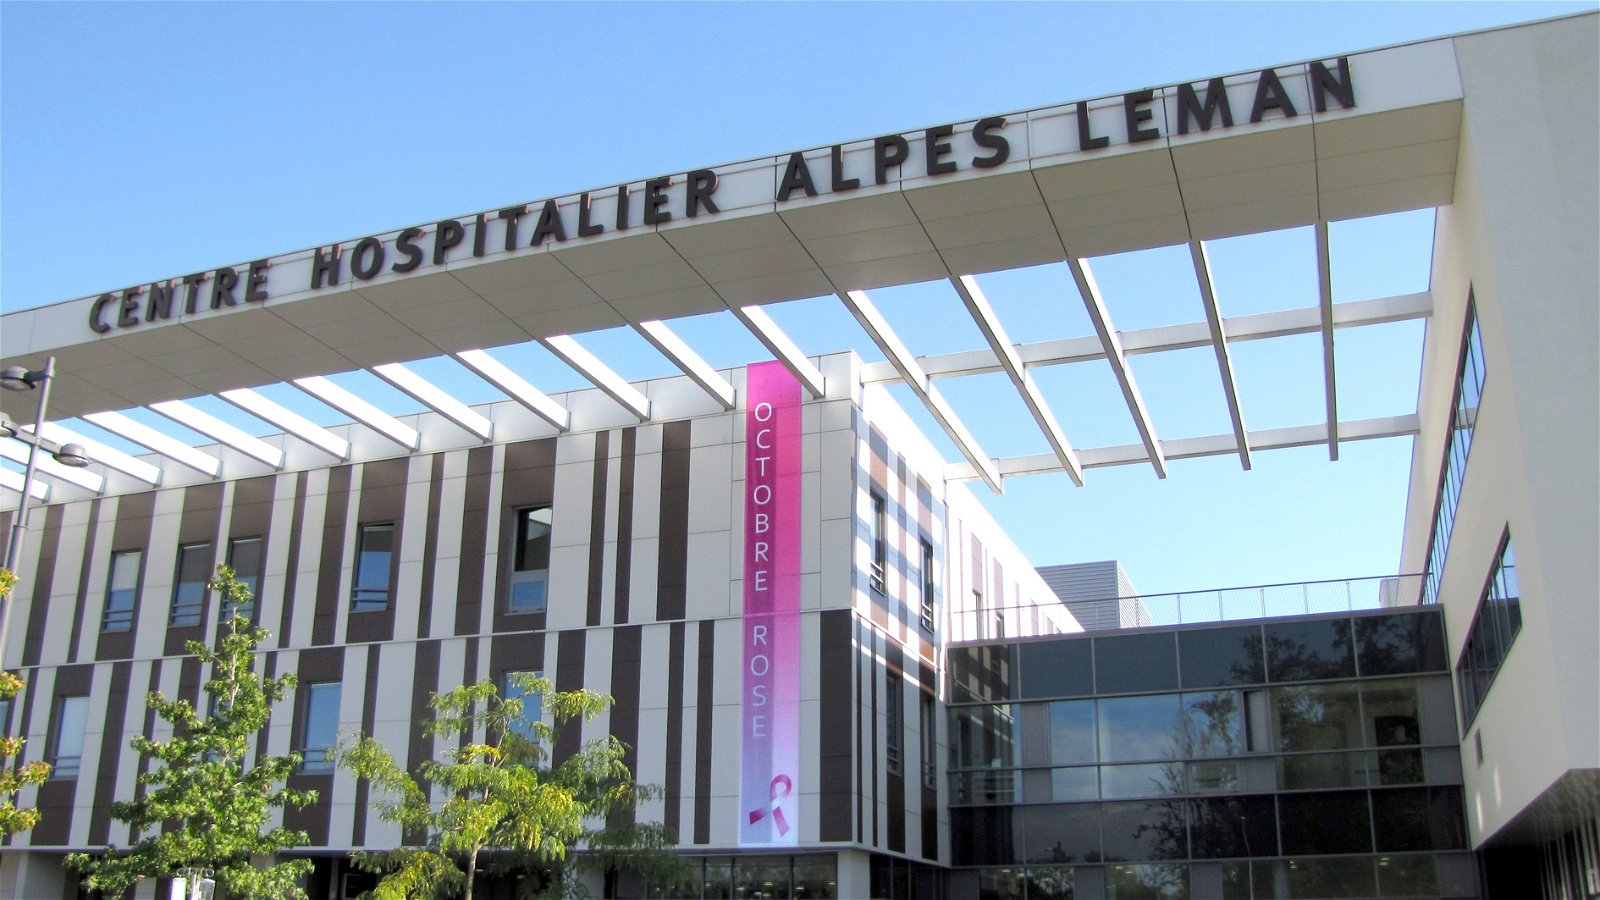 Centre Hospitalier Alpes-Léman